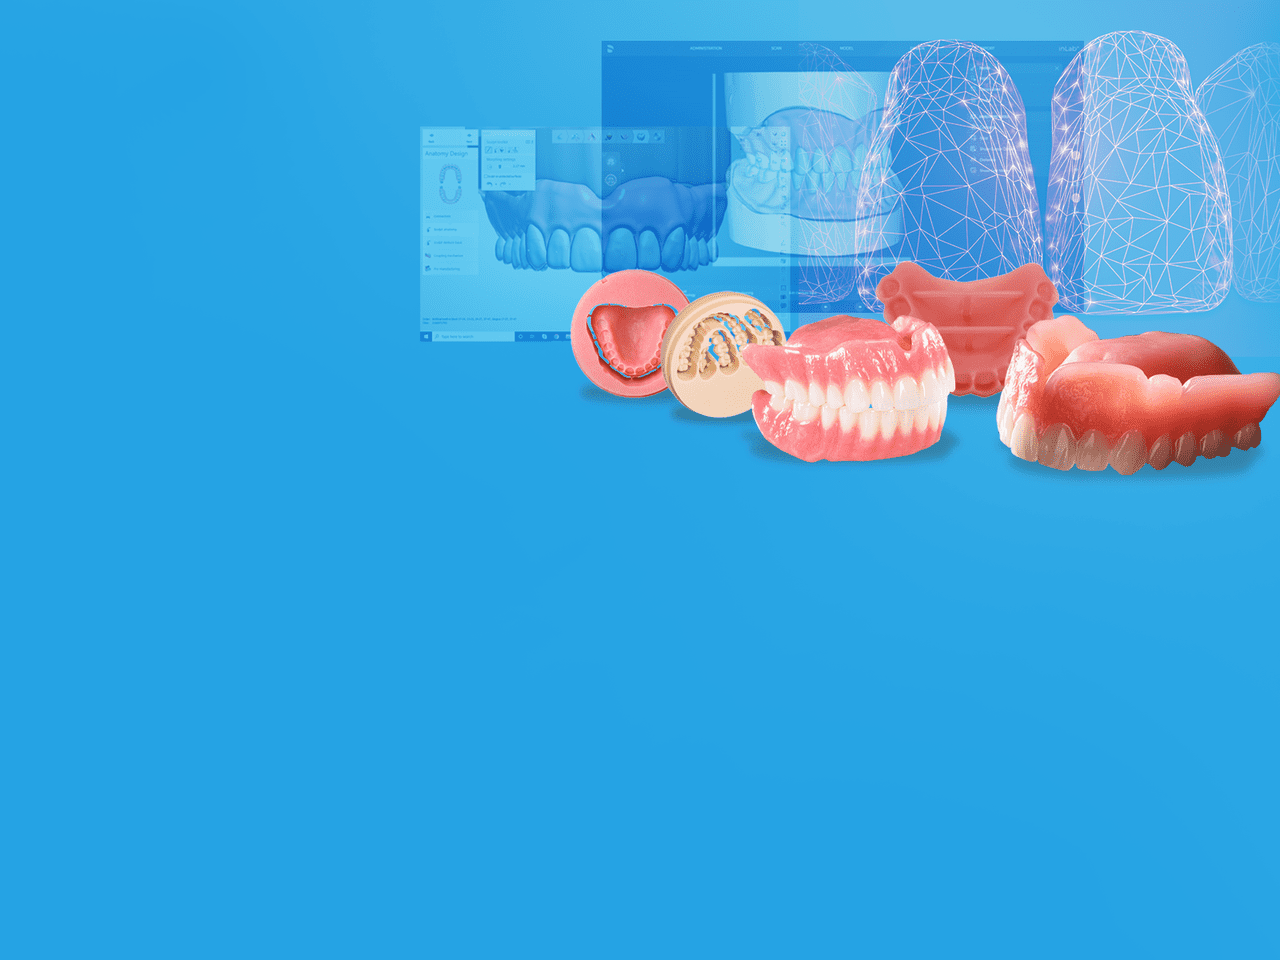 Dental laboratory products from Dentsply Sirona